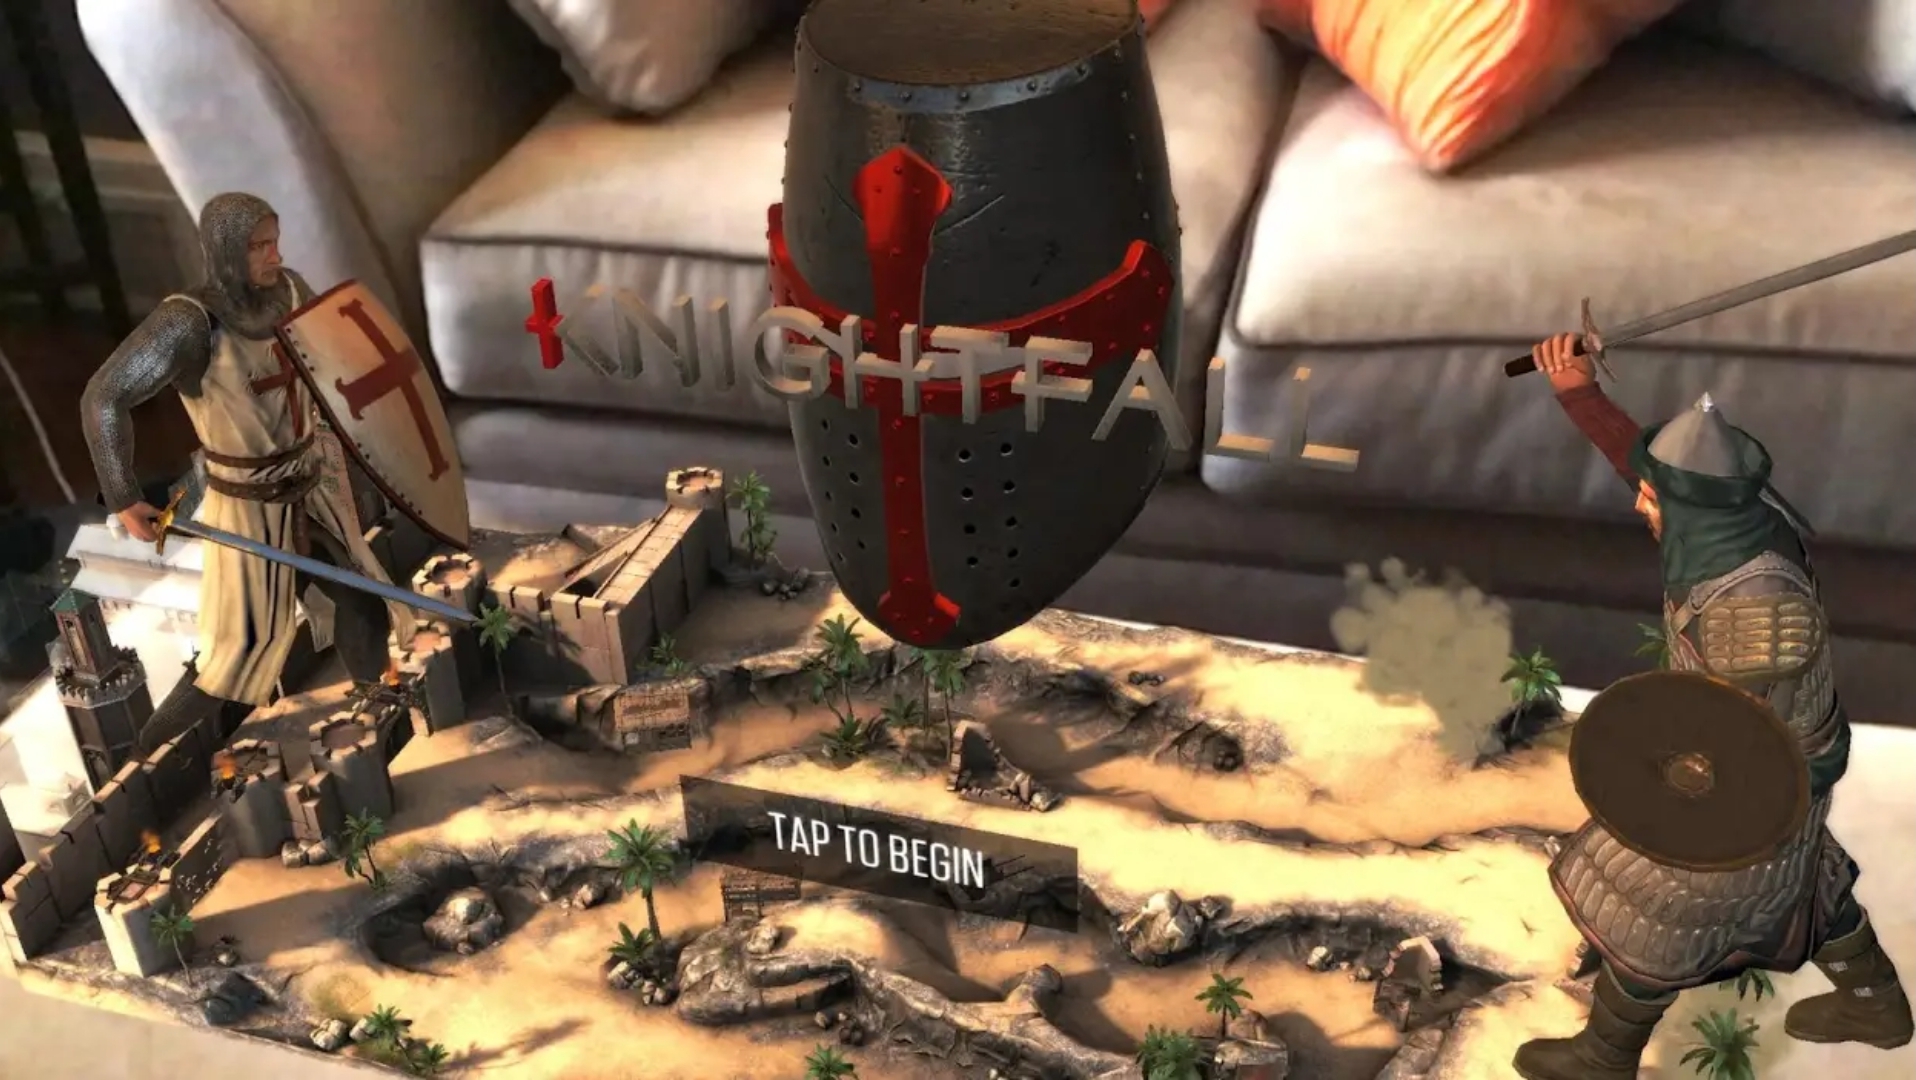 Knightfall-AR